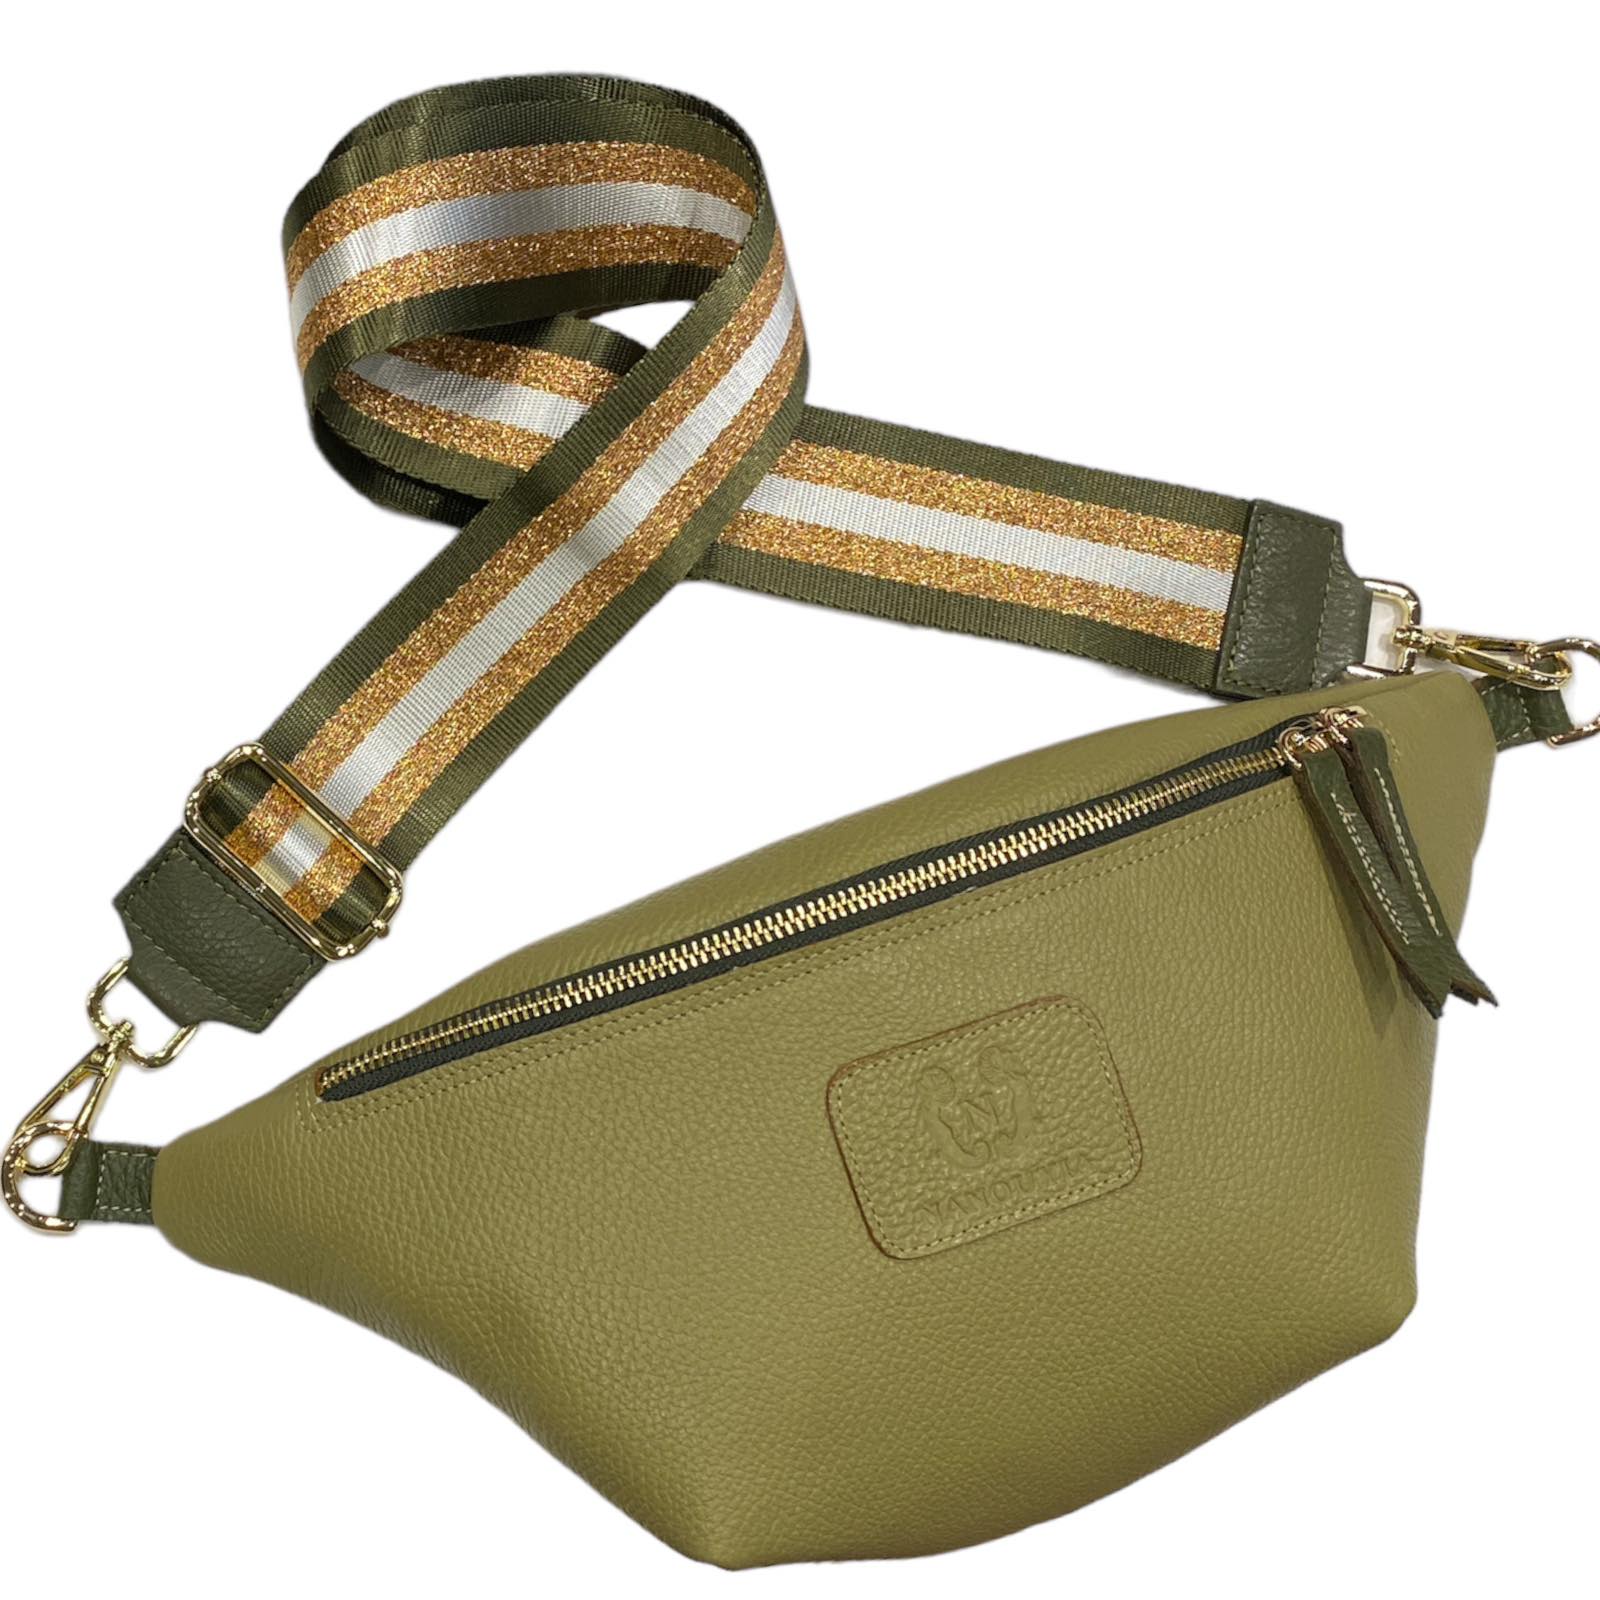 Avocado green leather belt bag